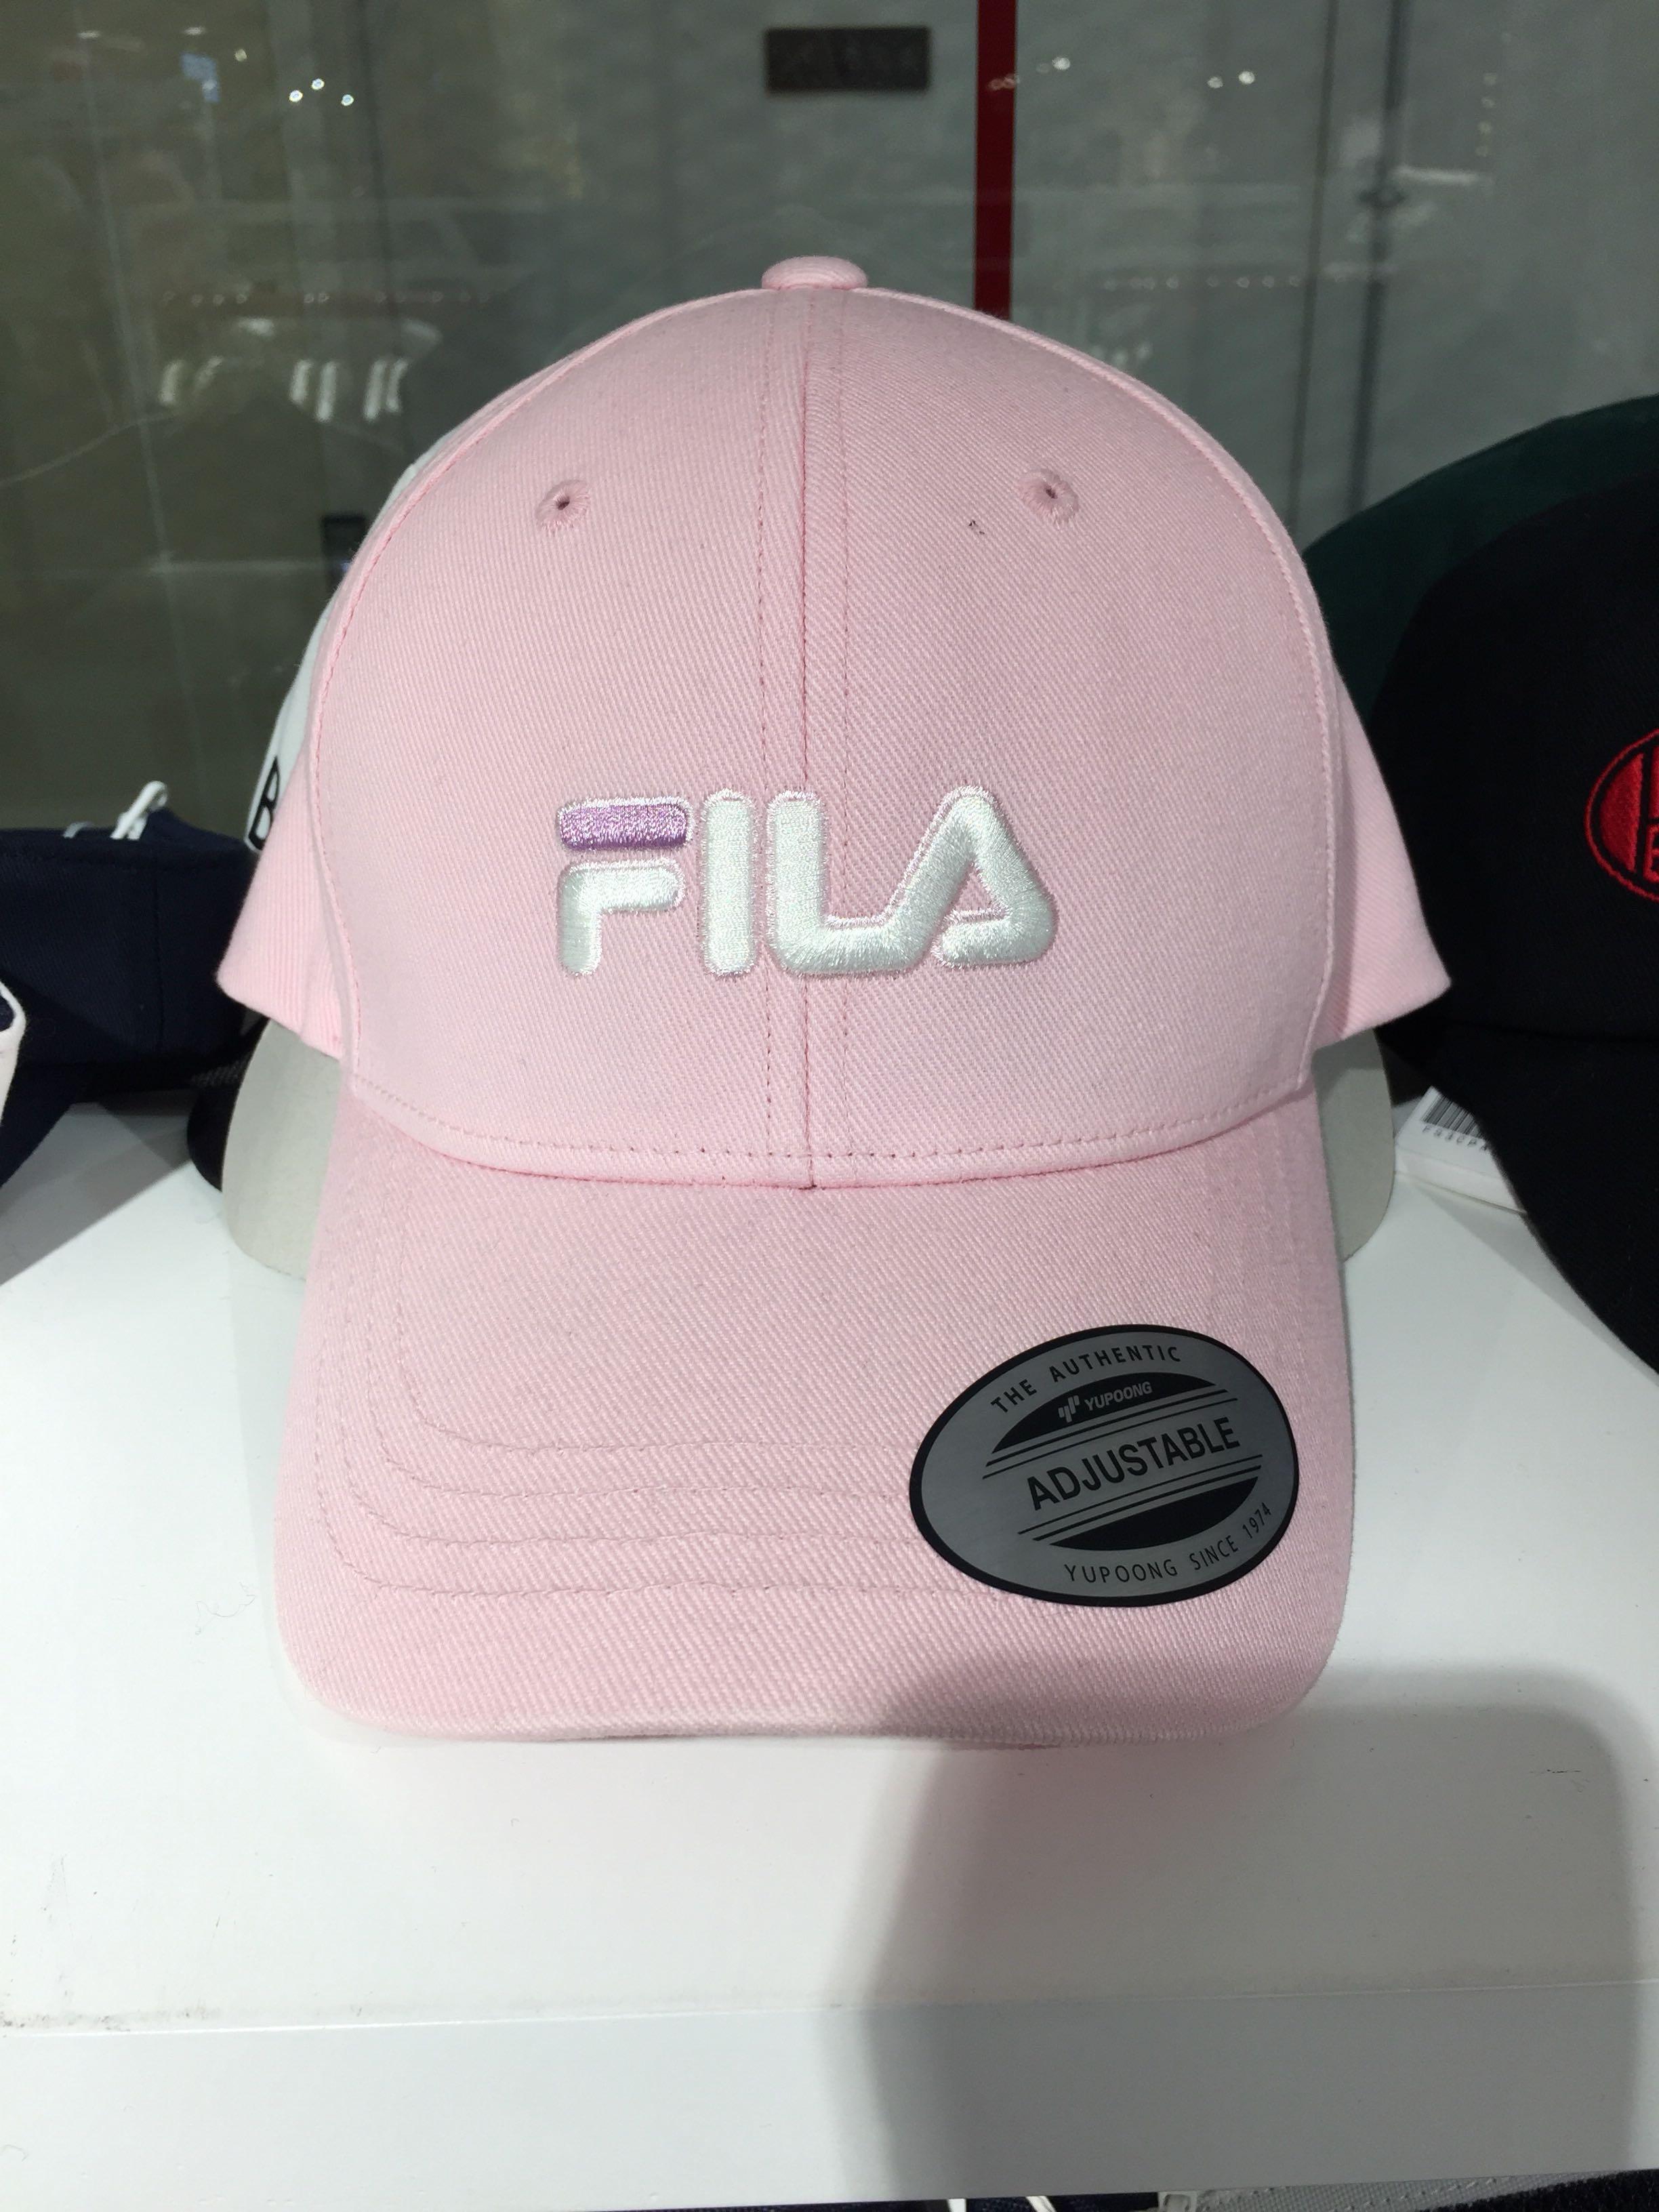 fila pink hat